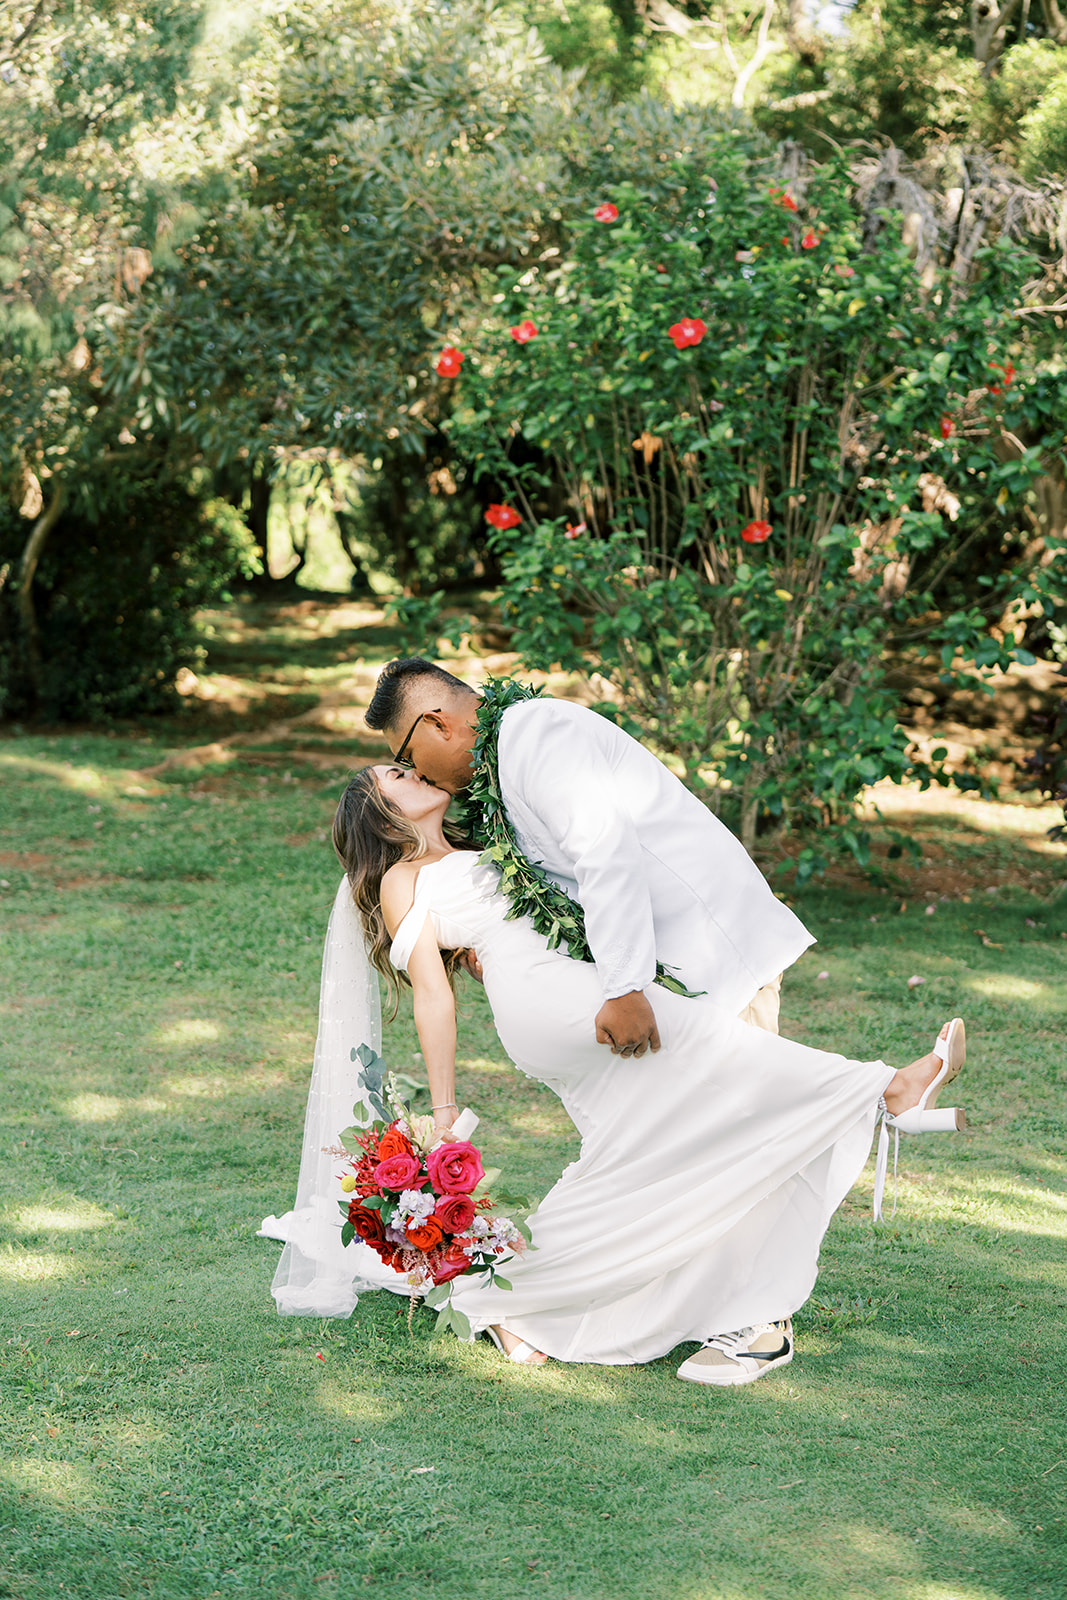 A couple in wedding attire sharing a kiss in a garden setting in Kauai.